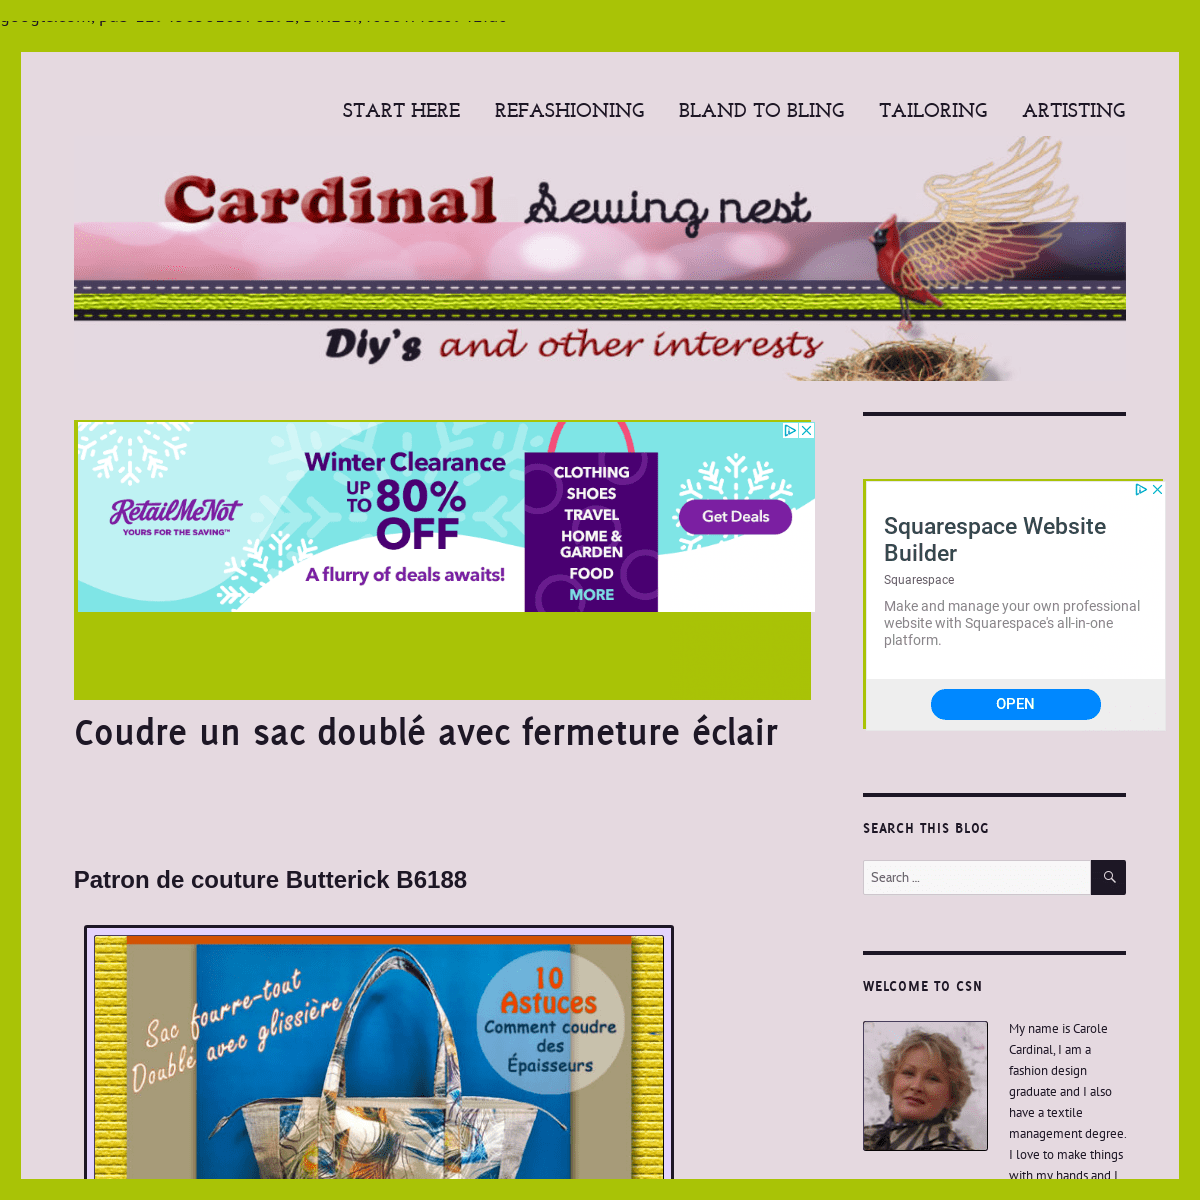 A complete backup of cardinalsewingnest.com